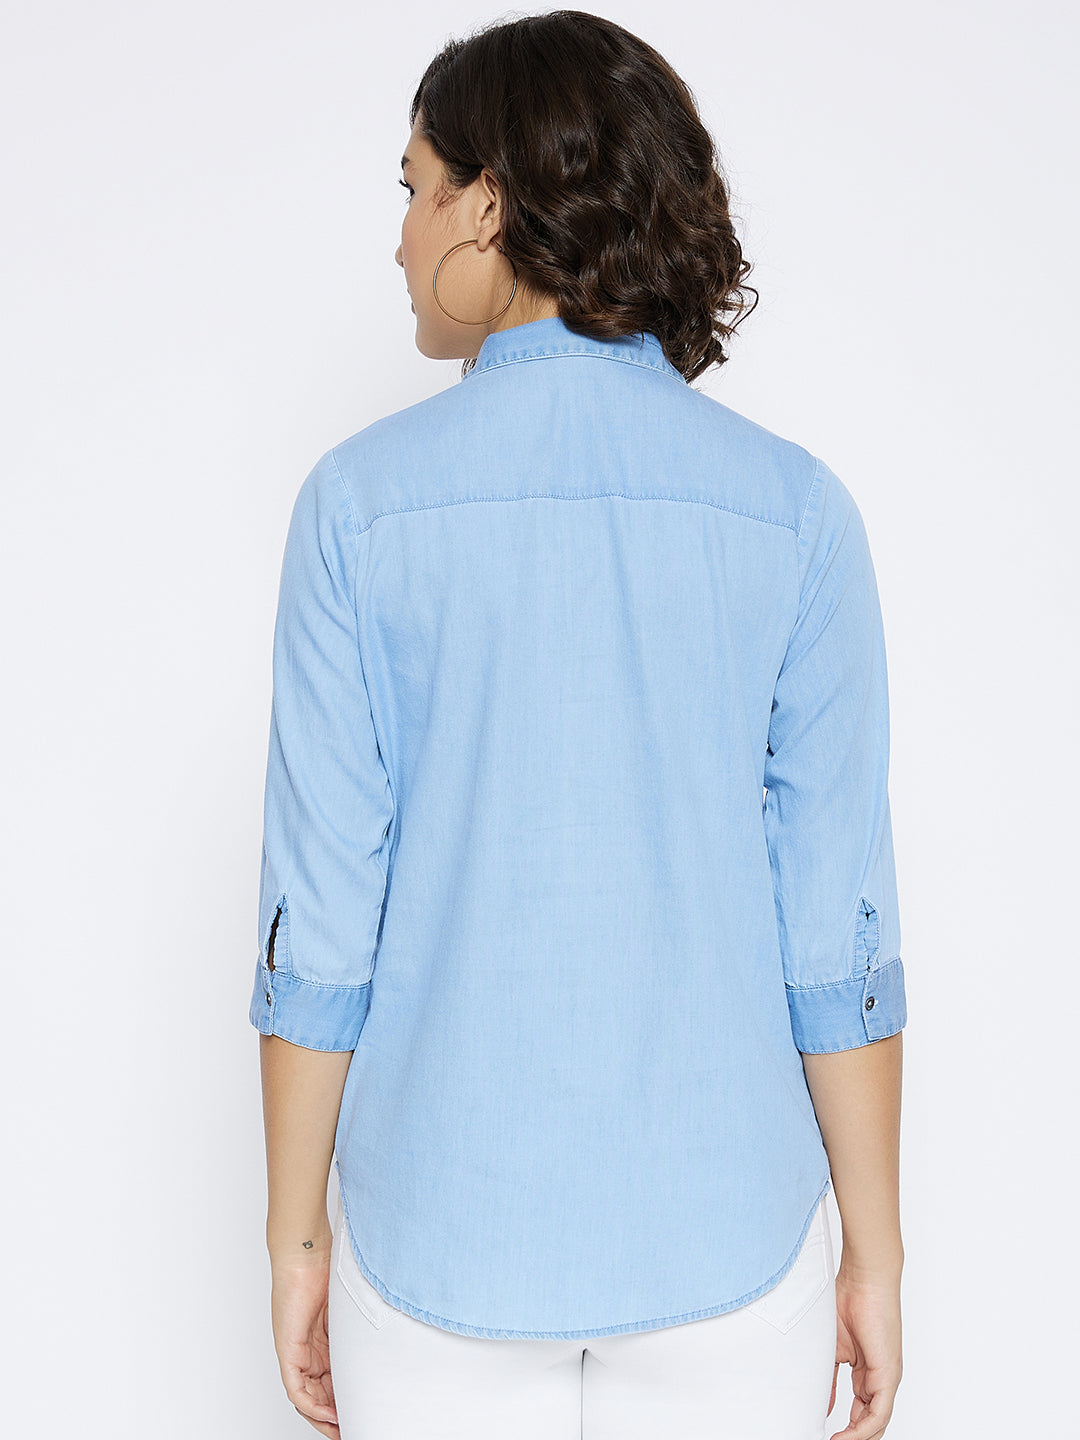 Blue Slim Fit denim shirt - Women Shirts